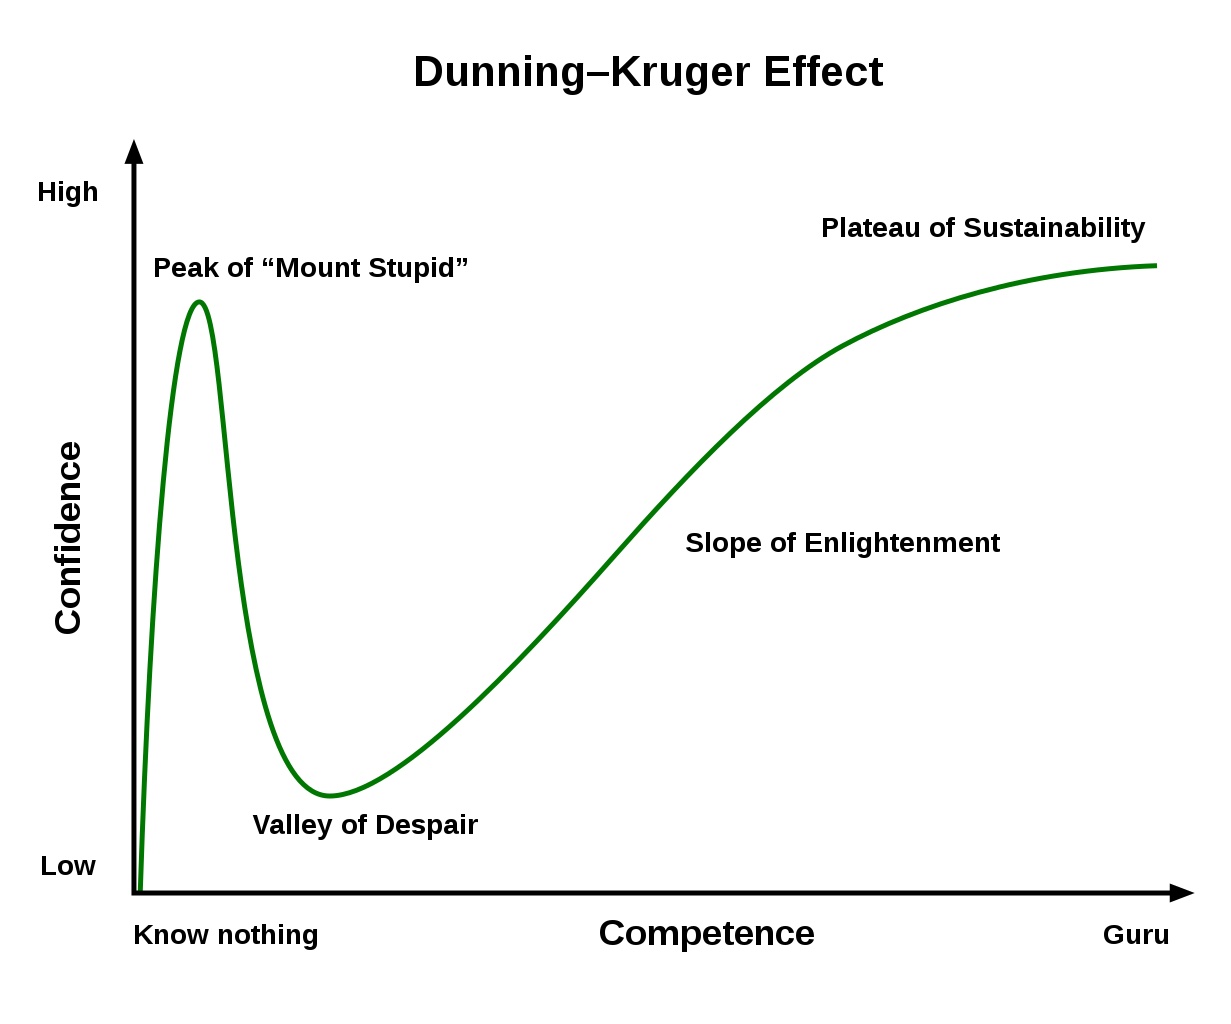 Simplified Dunning-Kruger effect